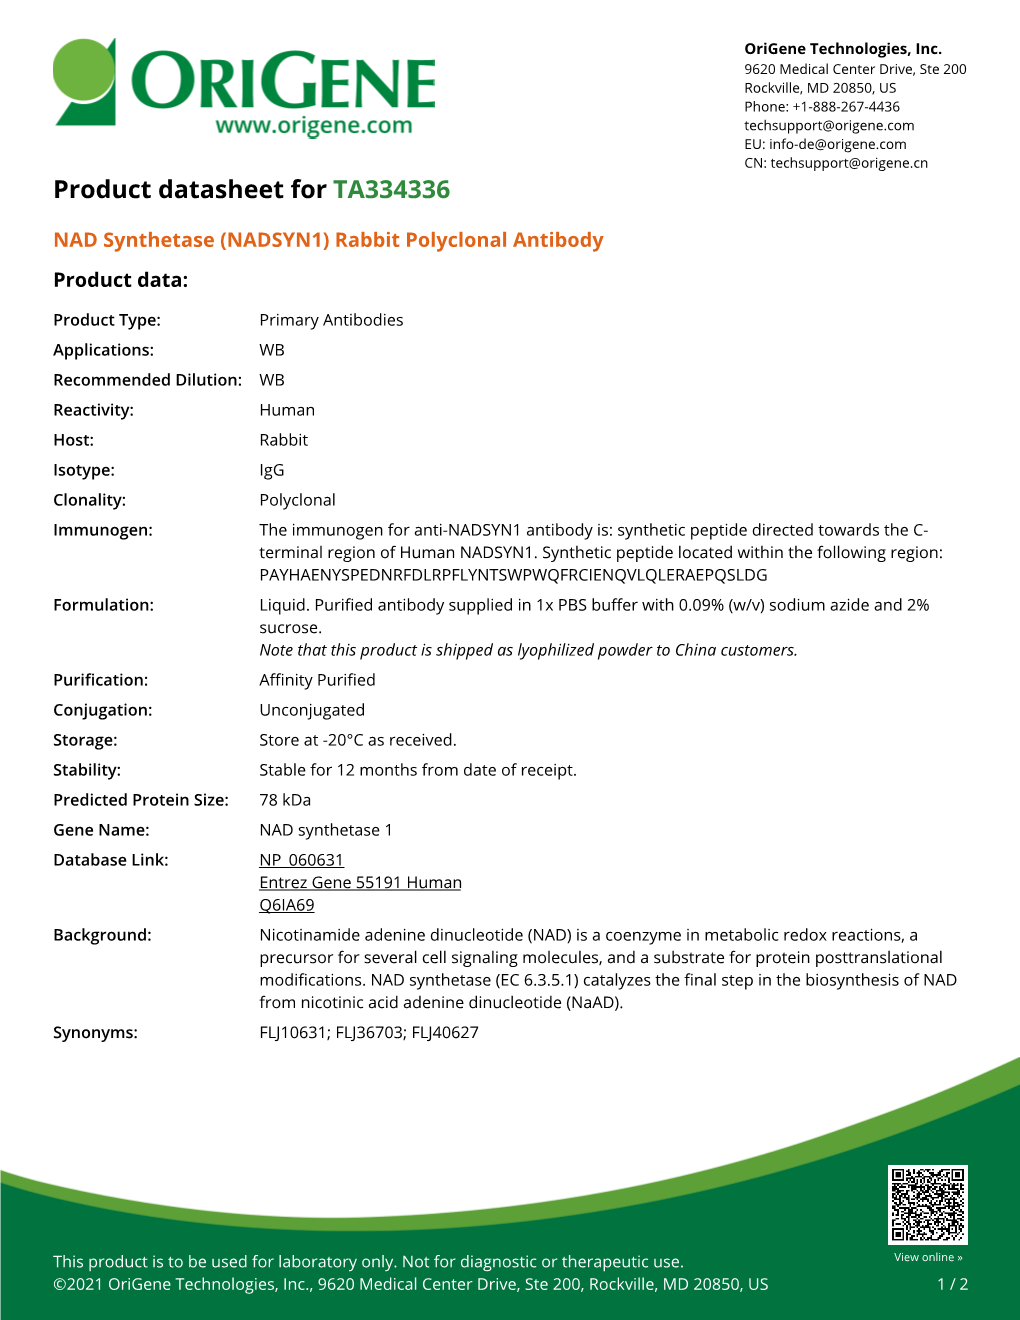 NAD Synthetase (NADSYN1) Rabbit Polyclonal Antibody Product Data